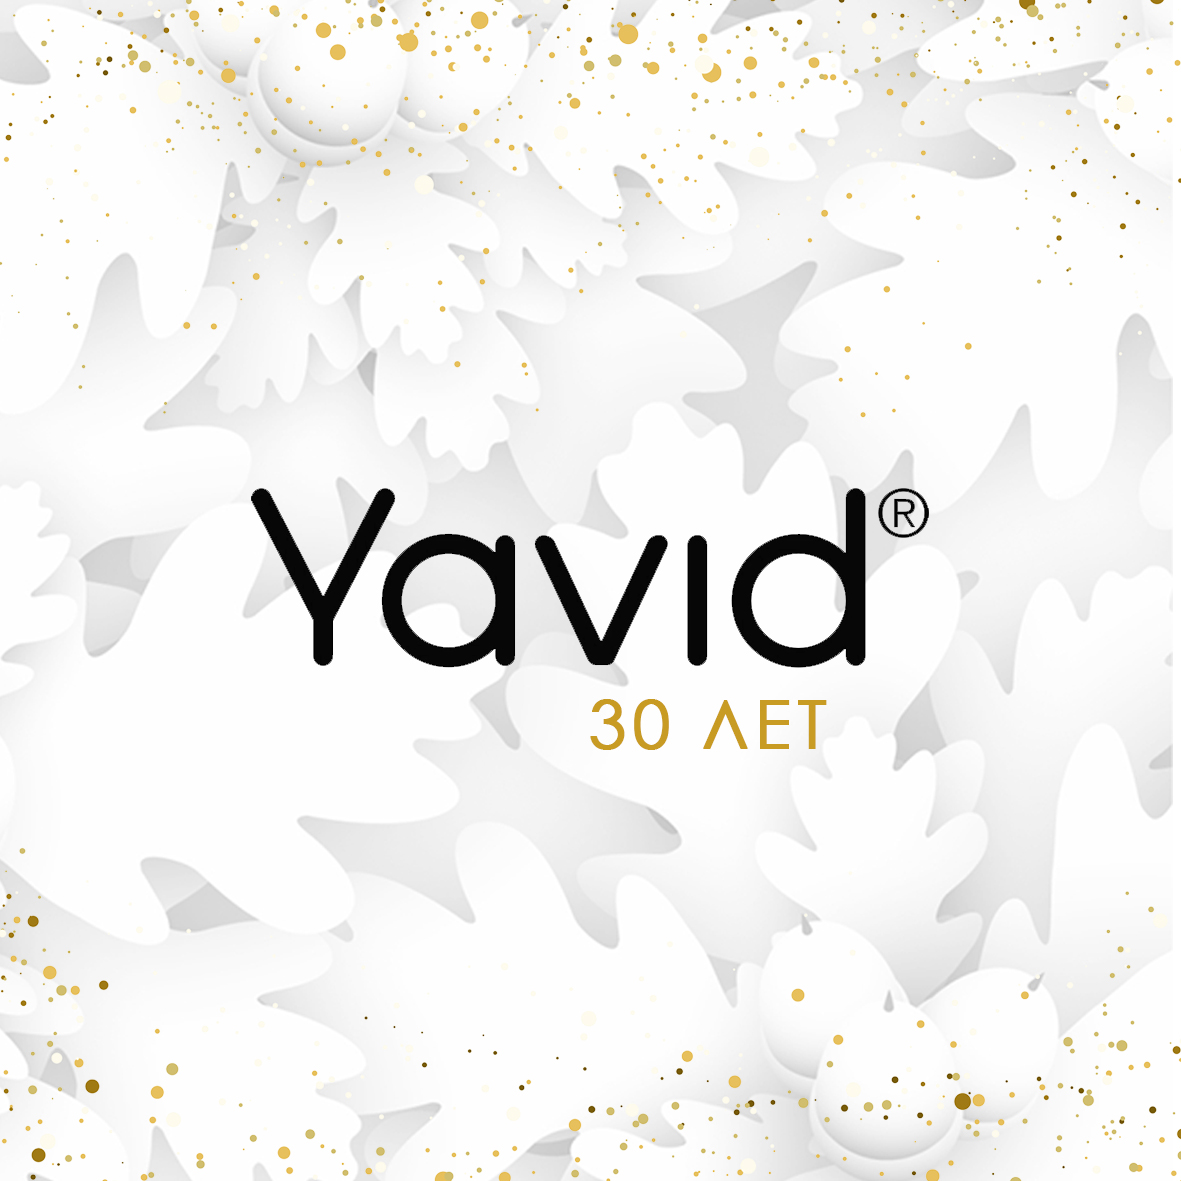 YAVID IS 30 YEARS OLD! HAPPY BIRTHDAY!